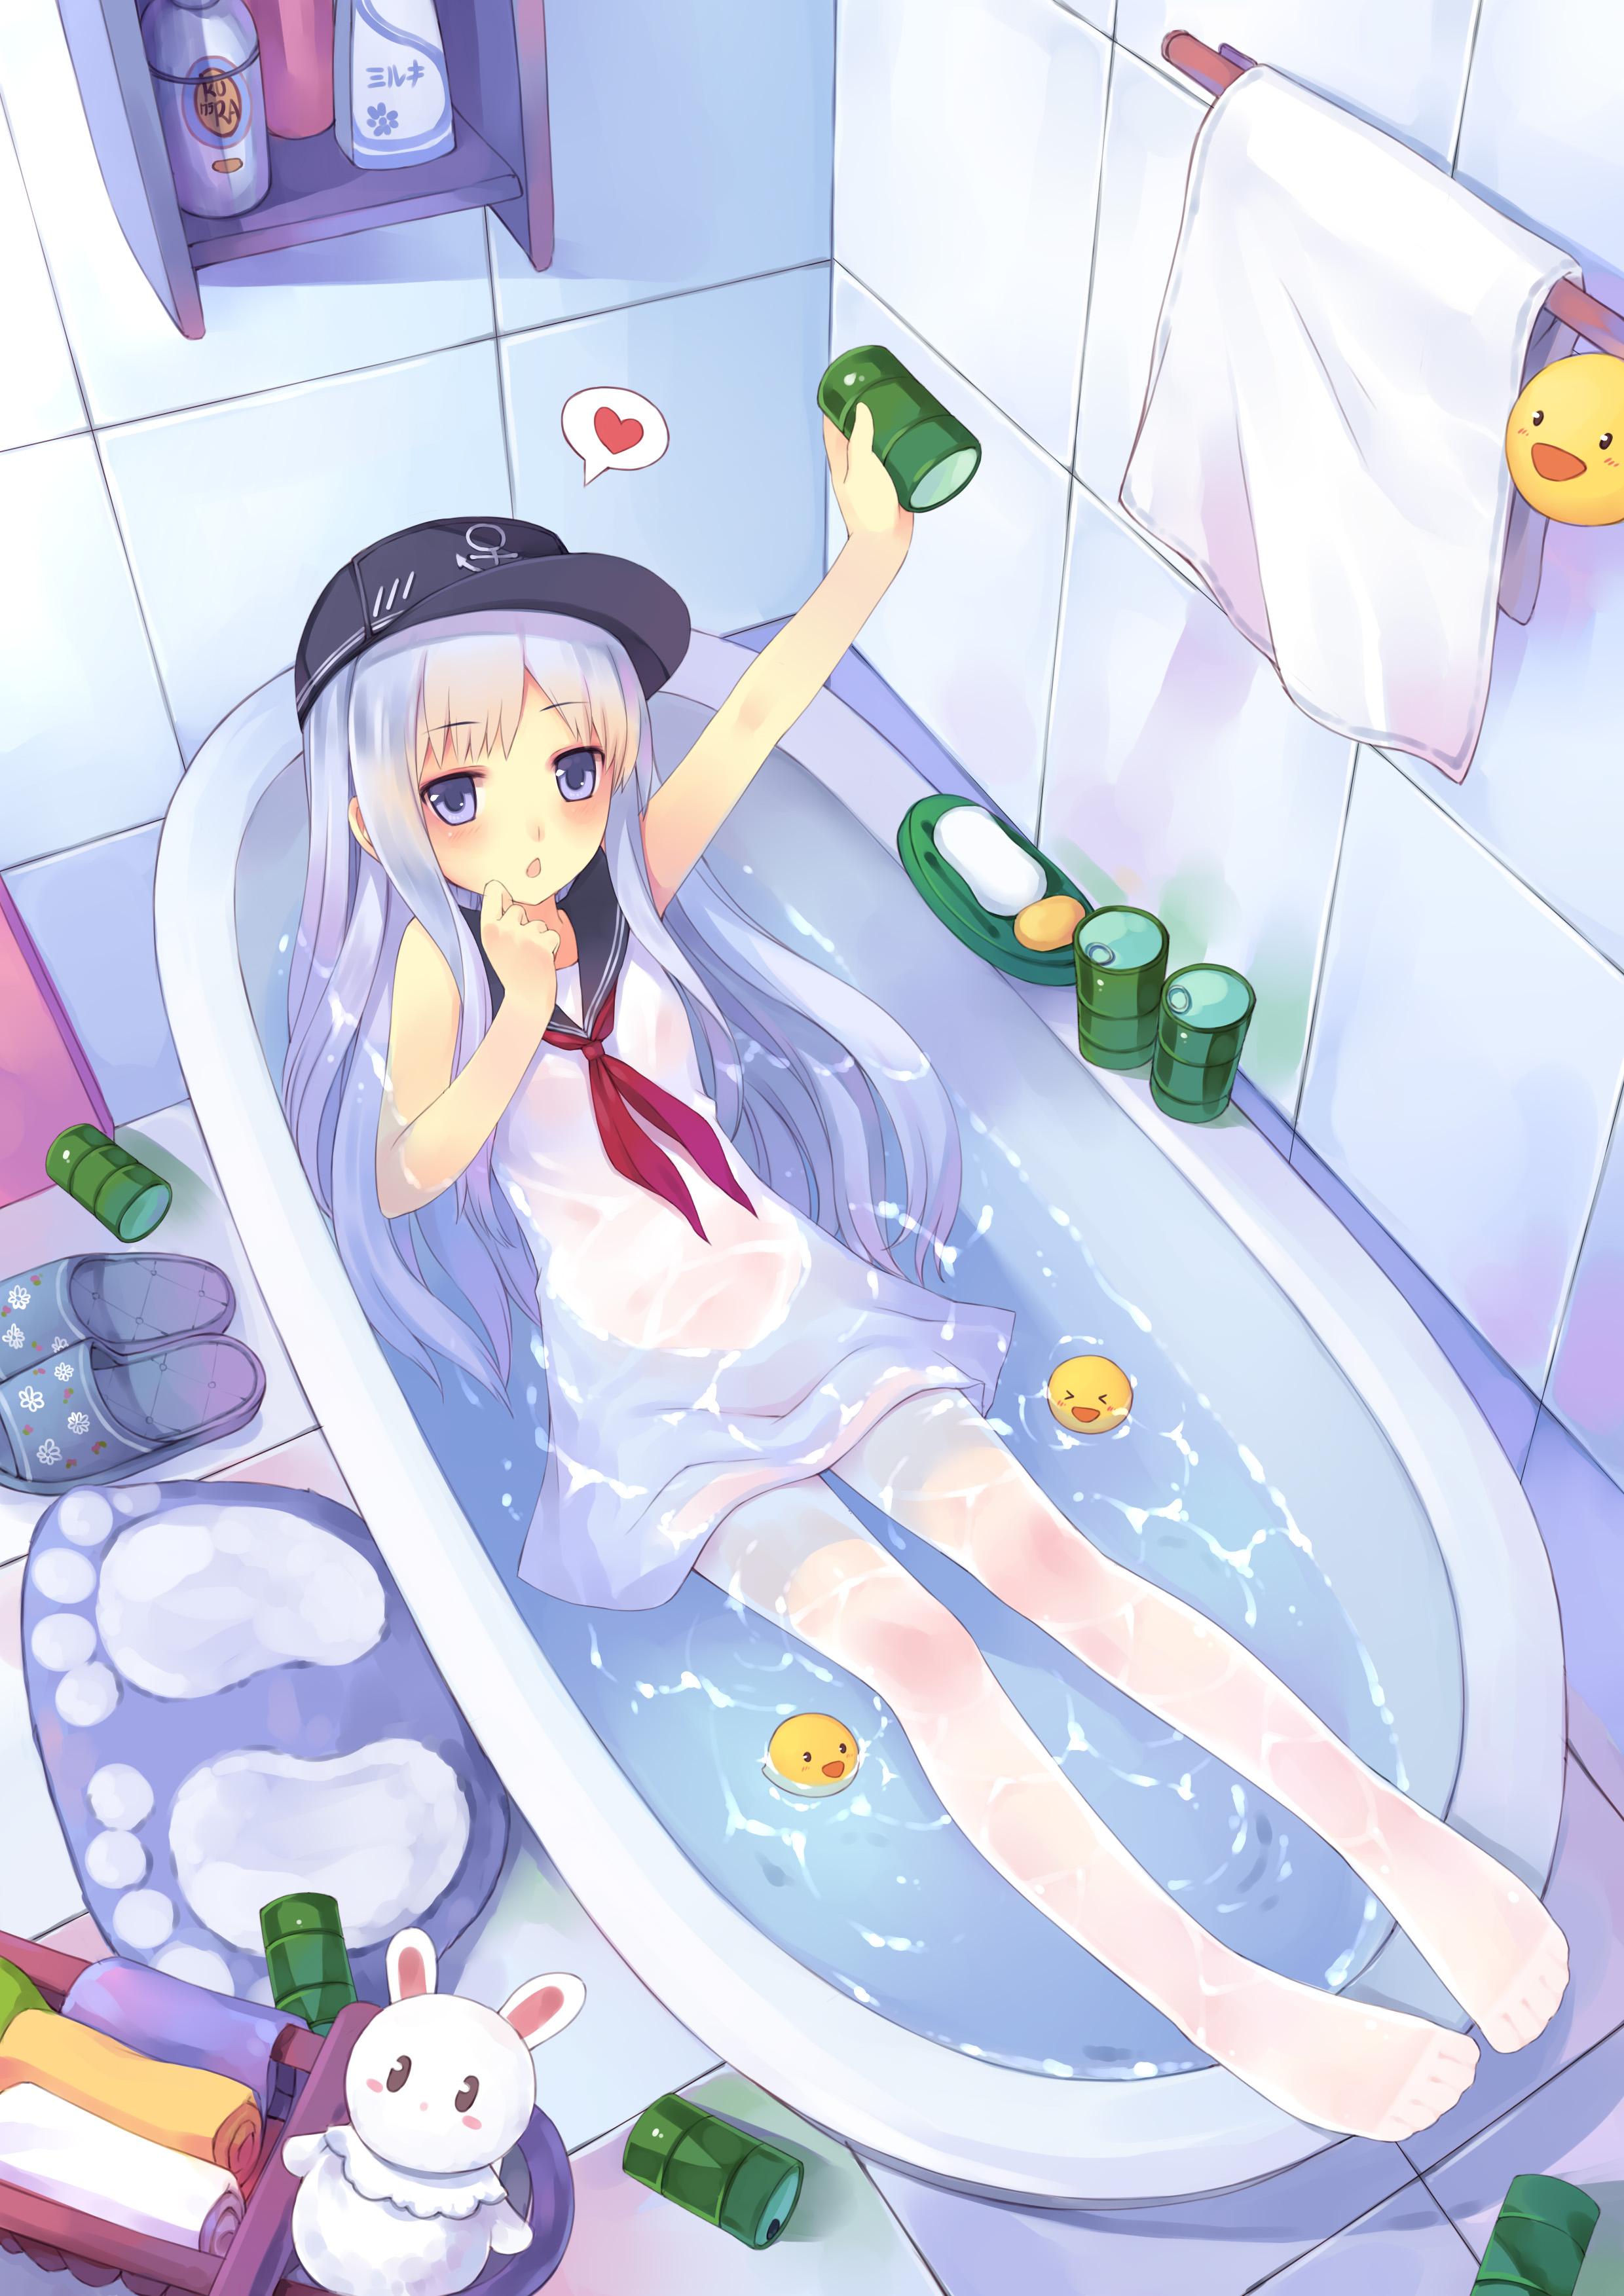 Anime 2480x3507 white stockings socks portrait display anime girls bathtub water in water wet wet clothing hat heart towel rubber ducks